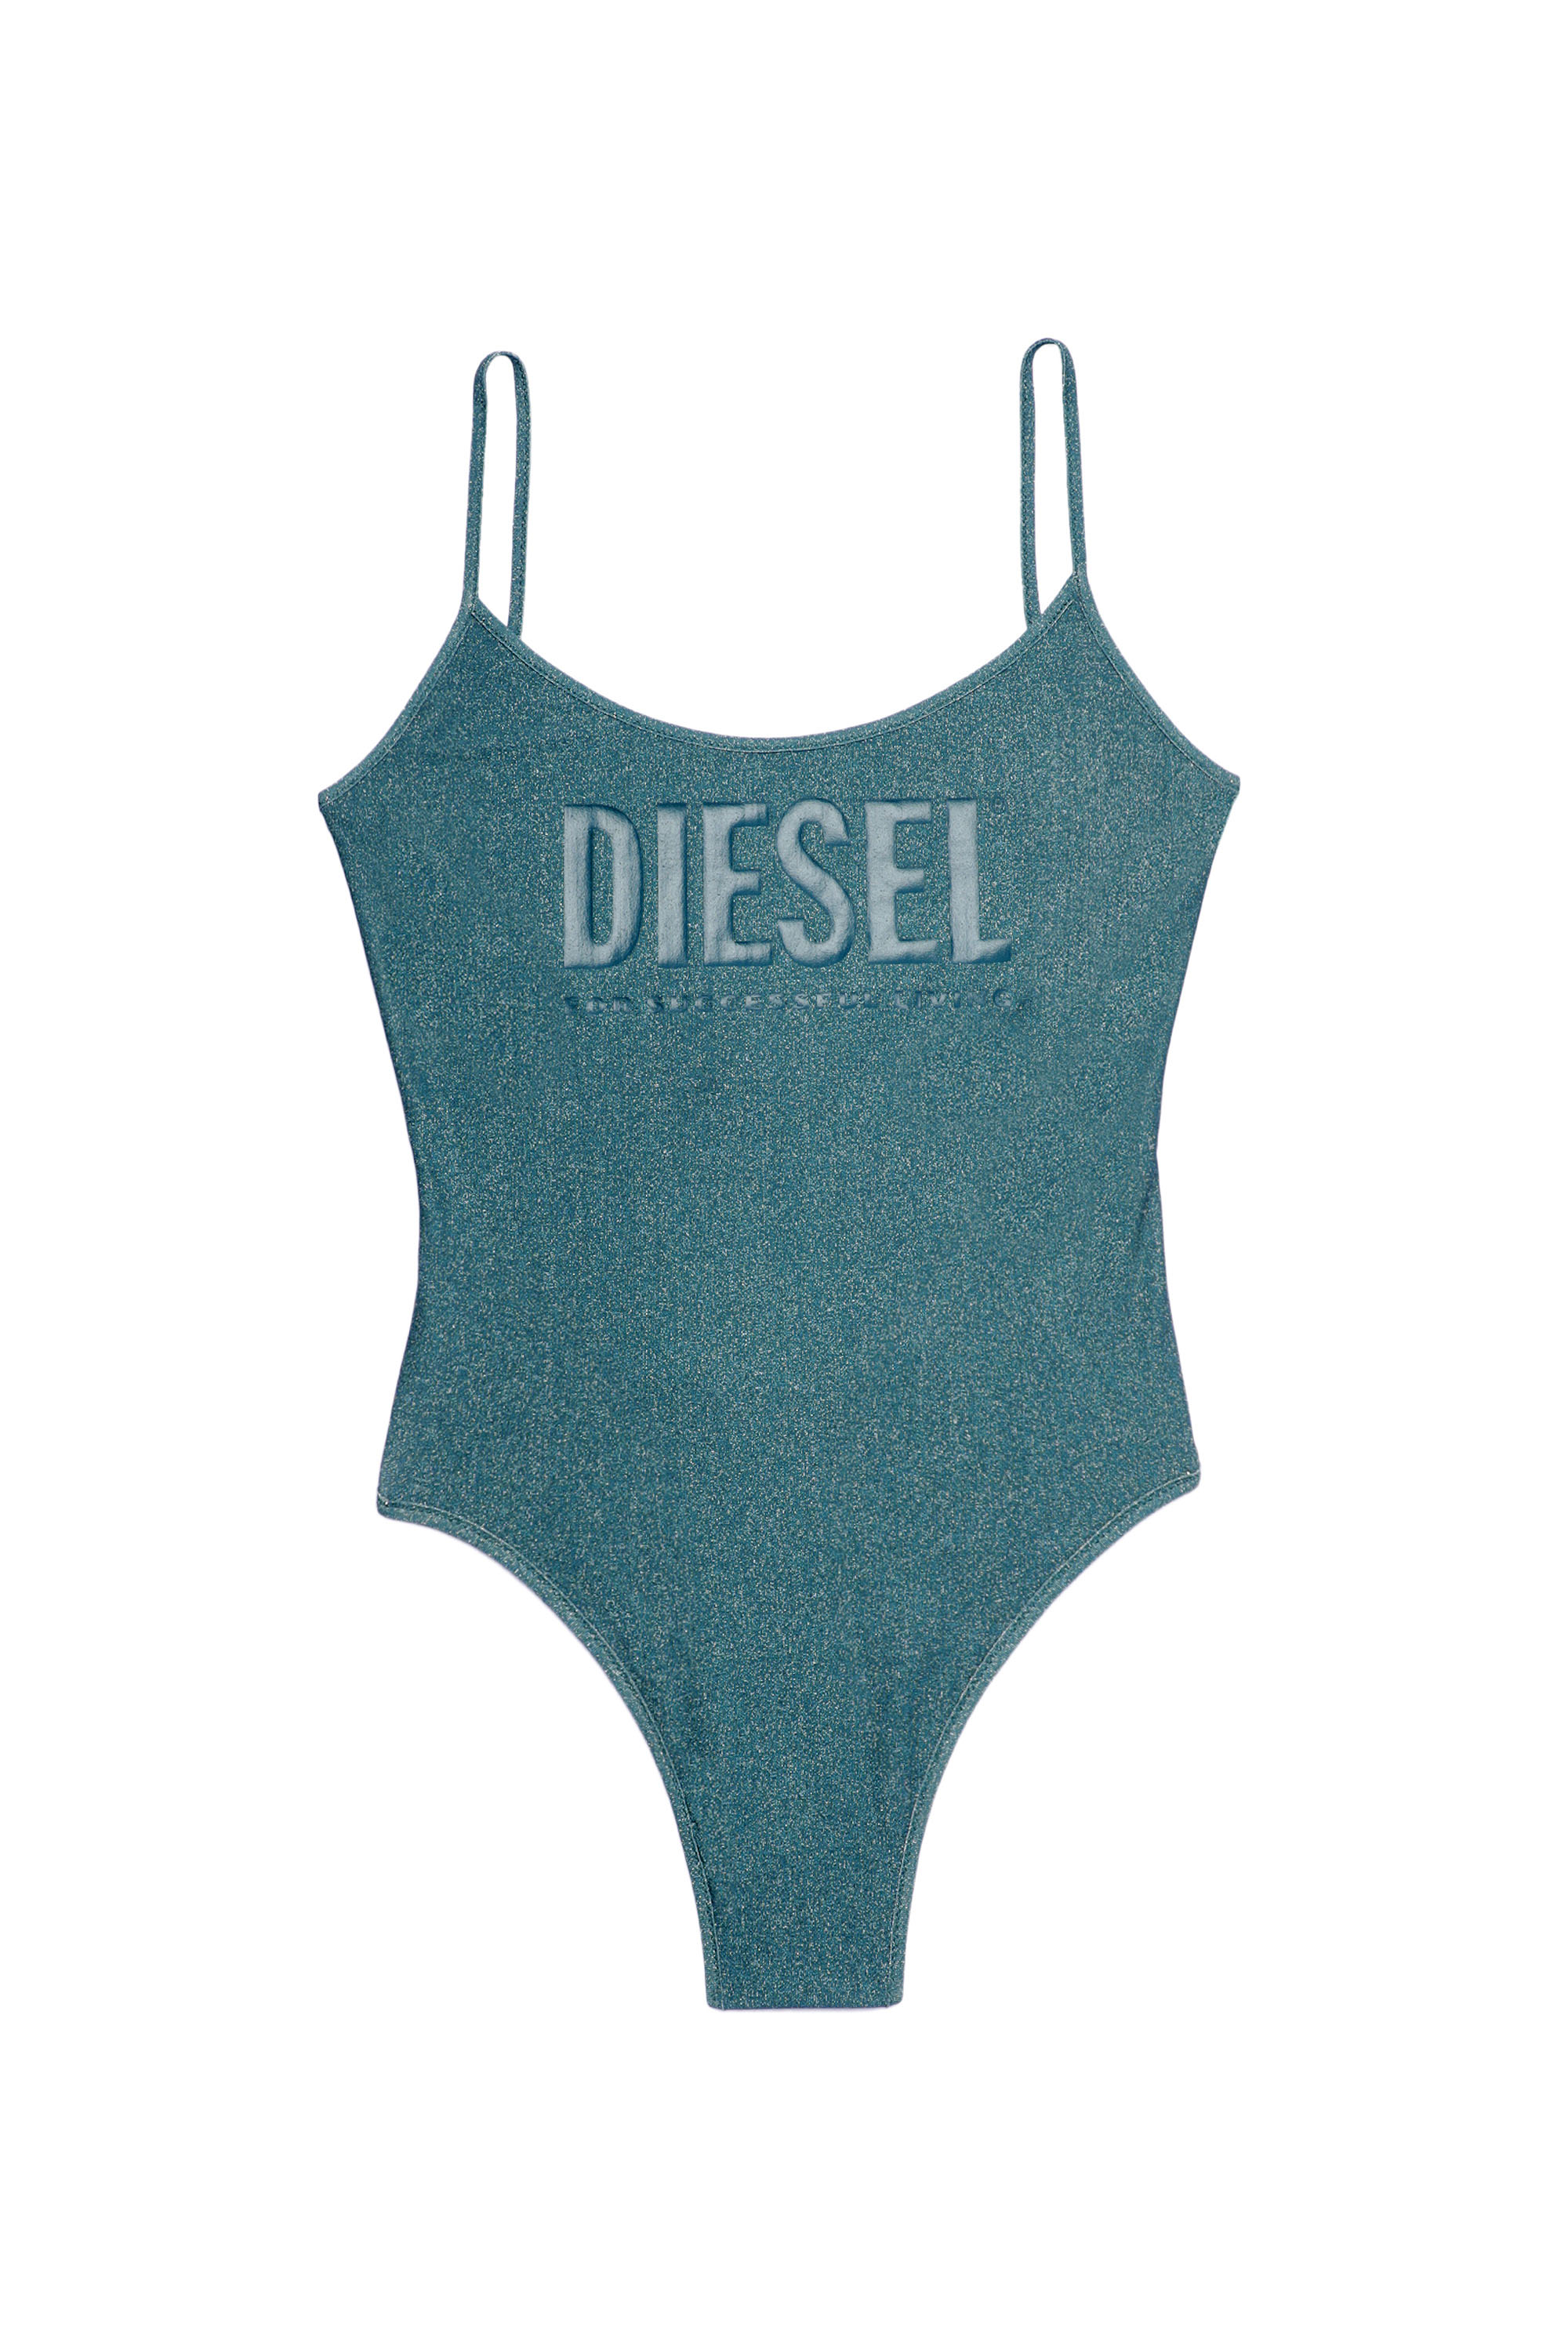 Diesel - BFSW-GRETEL, Bleu - Image 1